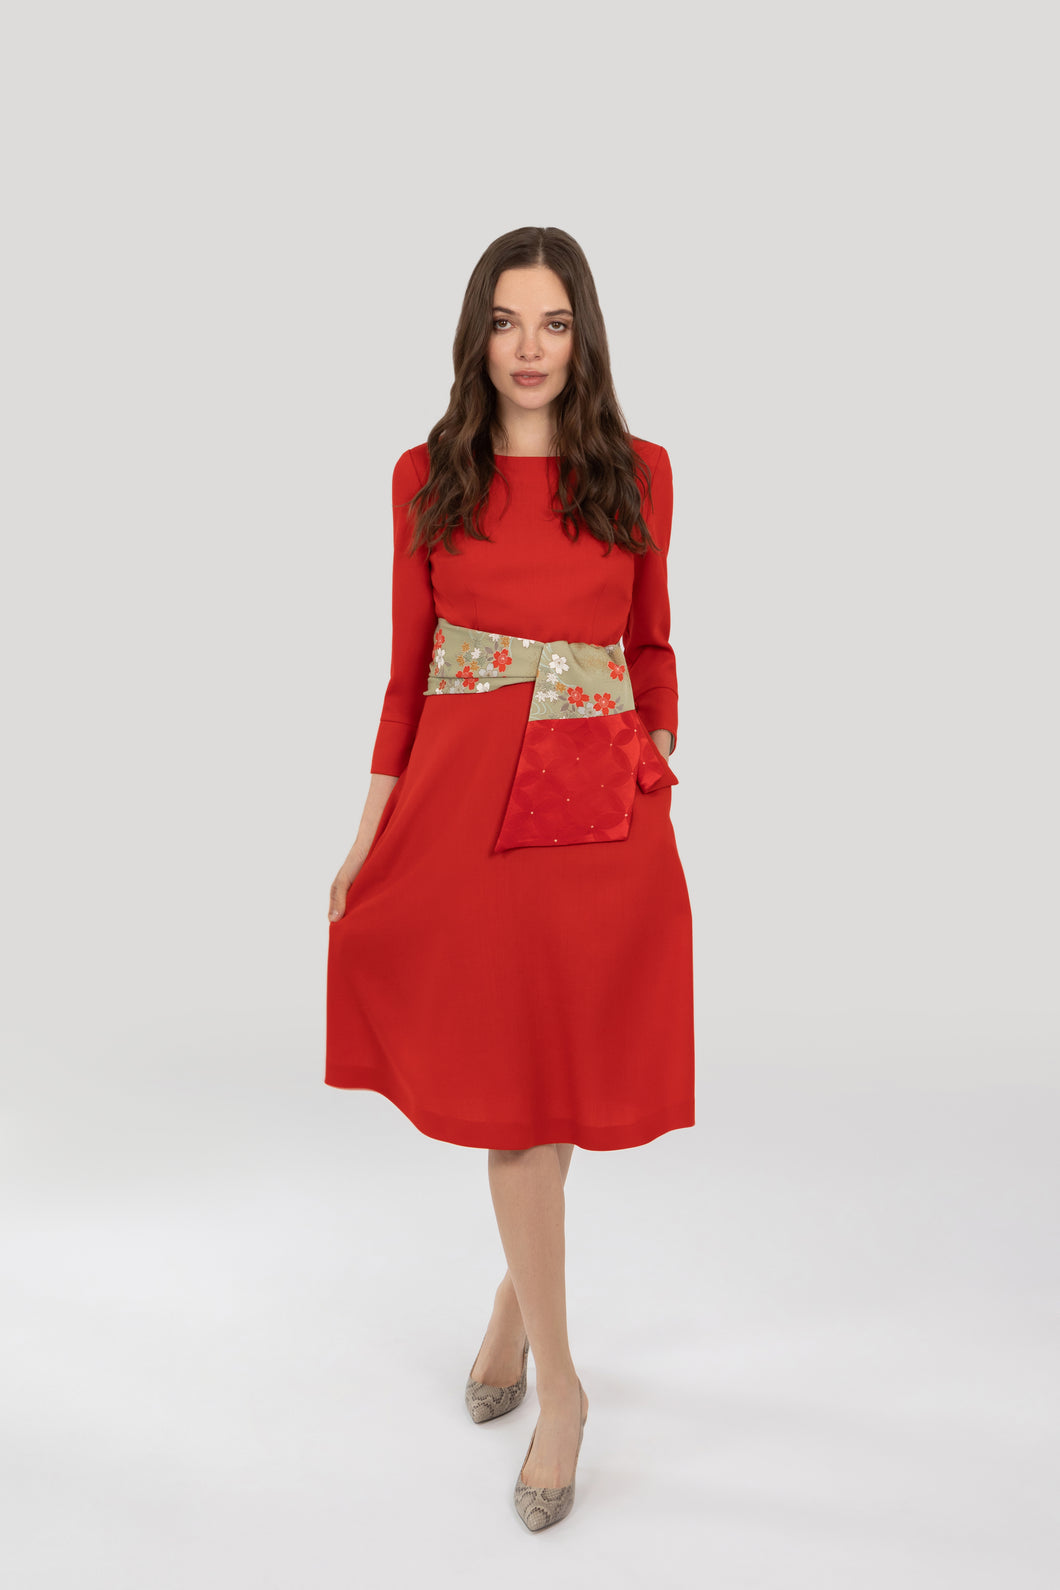 Audrey Dress - Brick Red